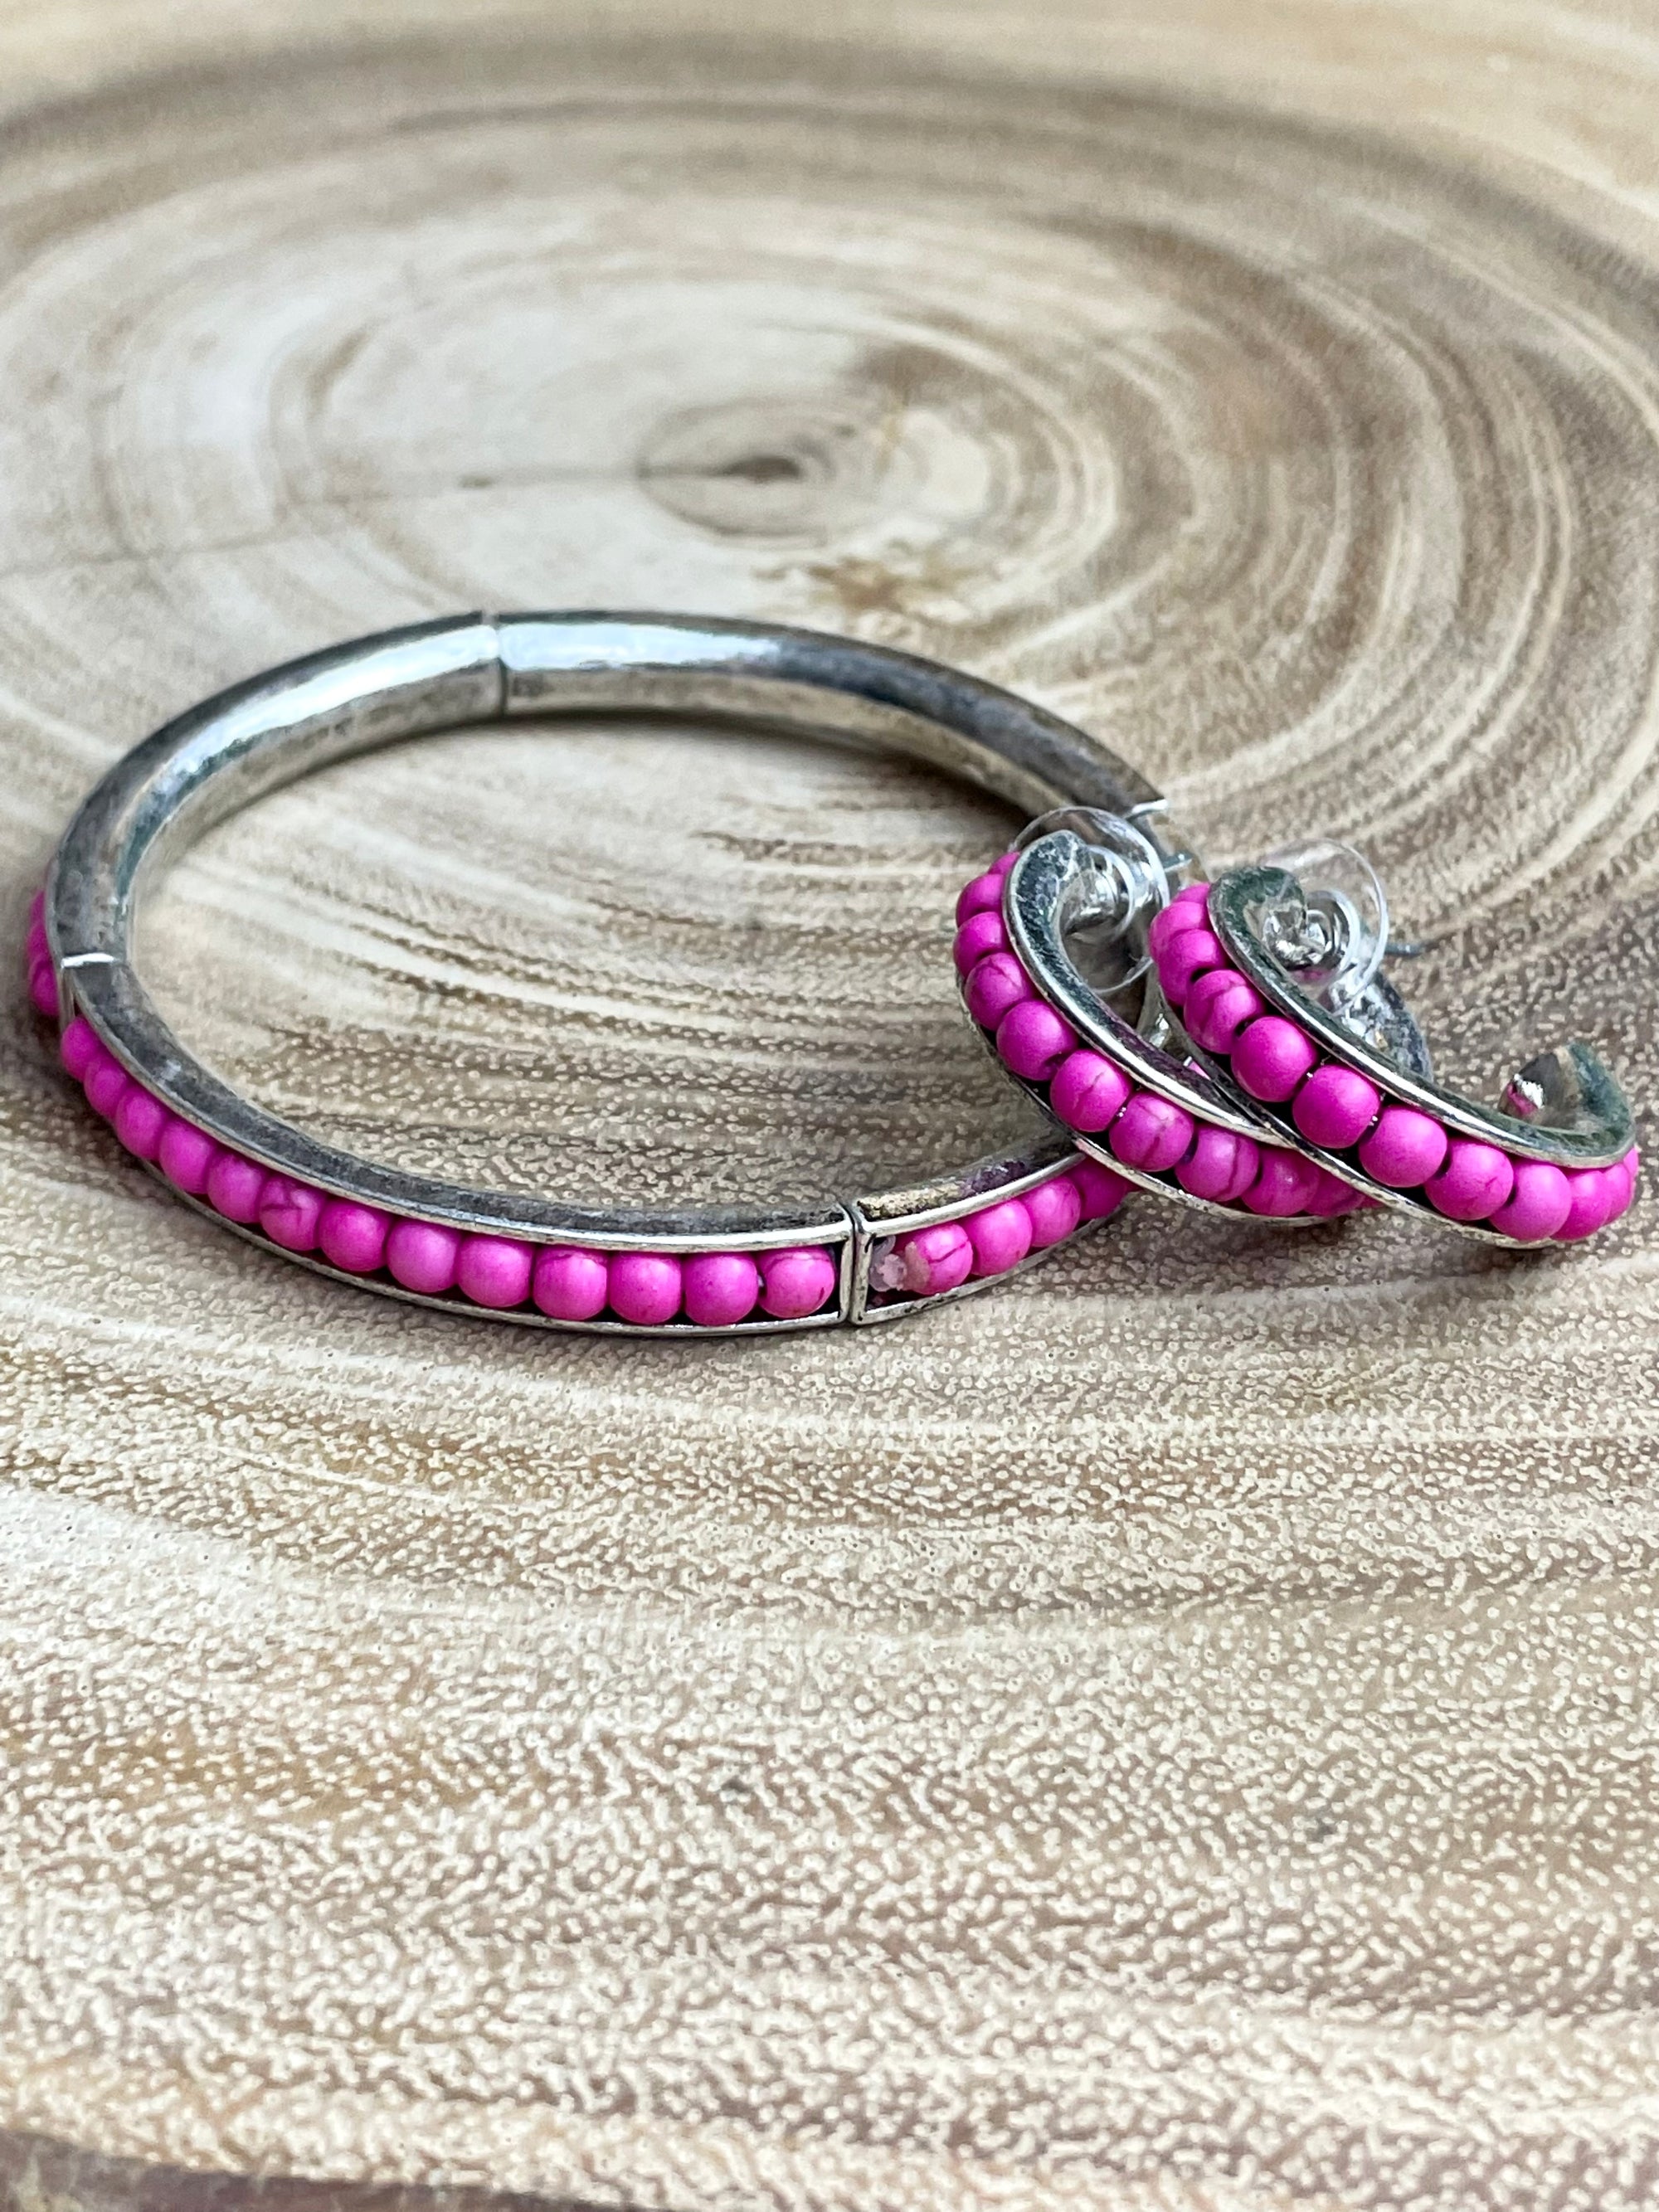 Stacked Bead Stretch Bracelet & Earrings - Silver/Pink